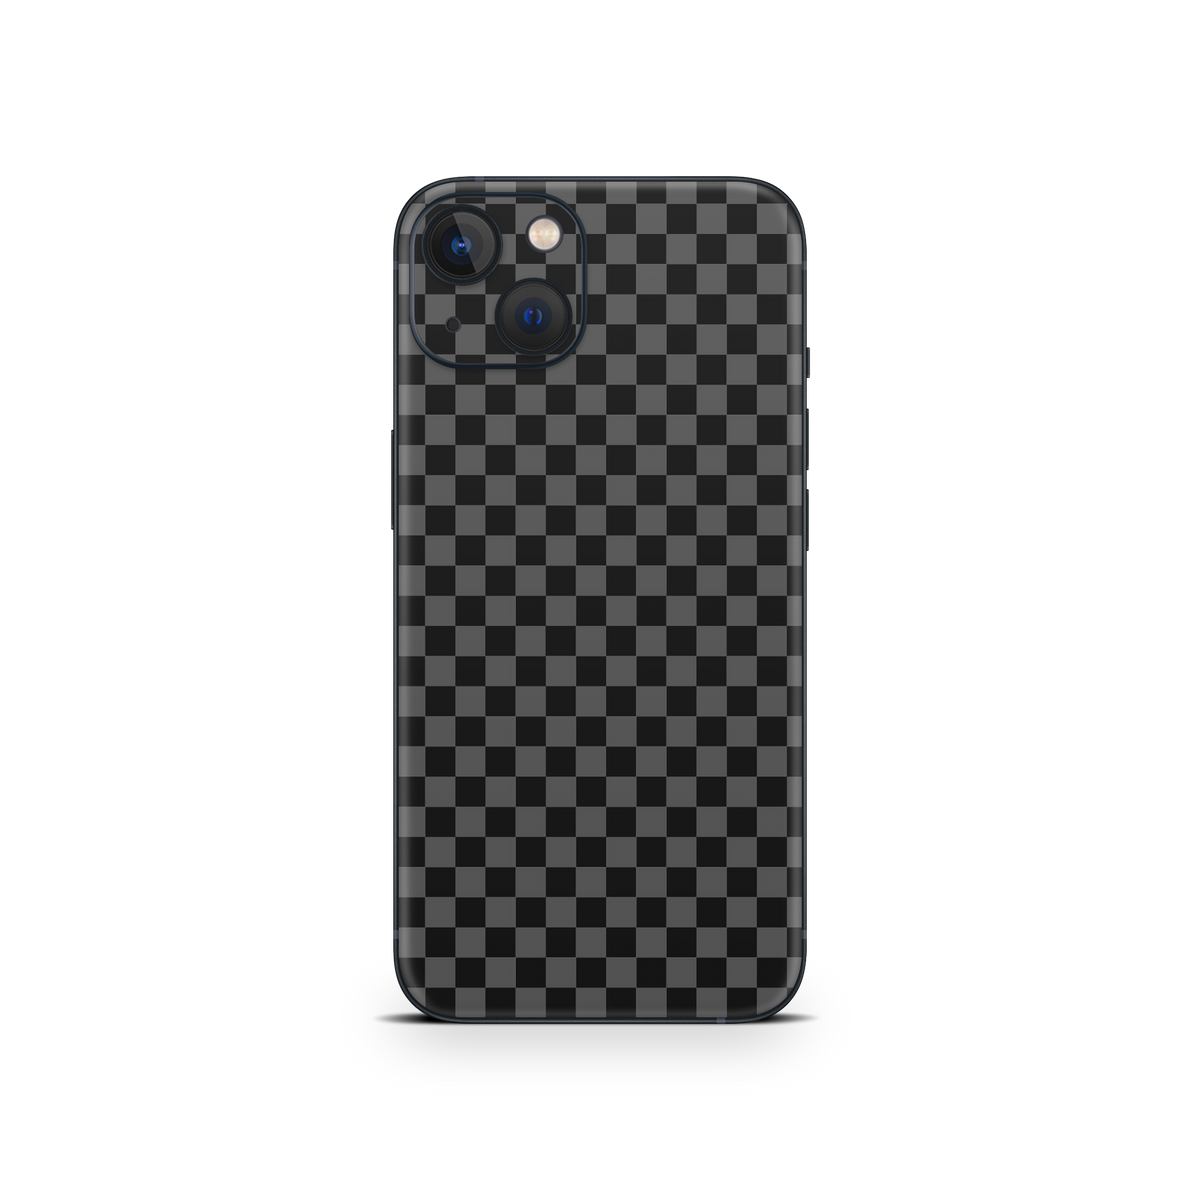 Apple iPhone Checkers black Skin